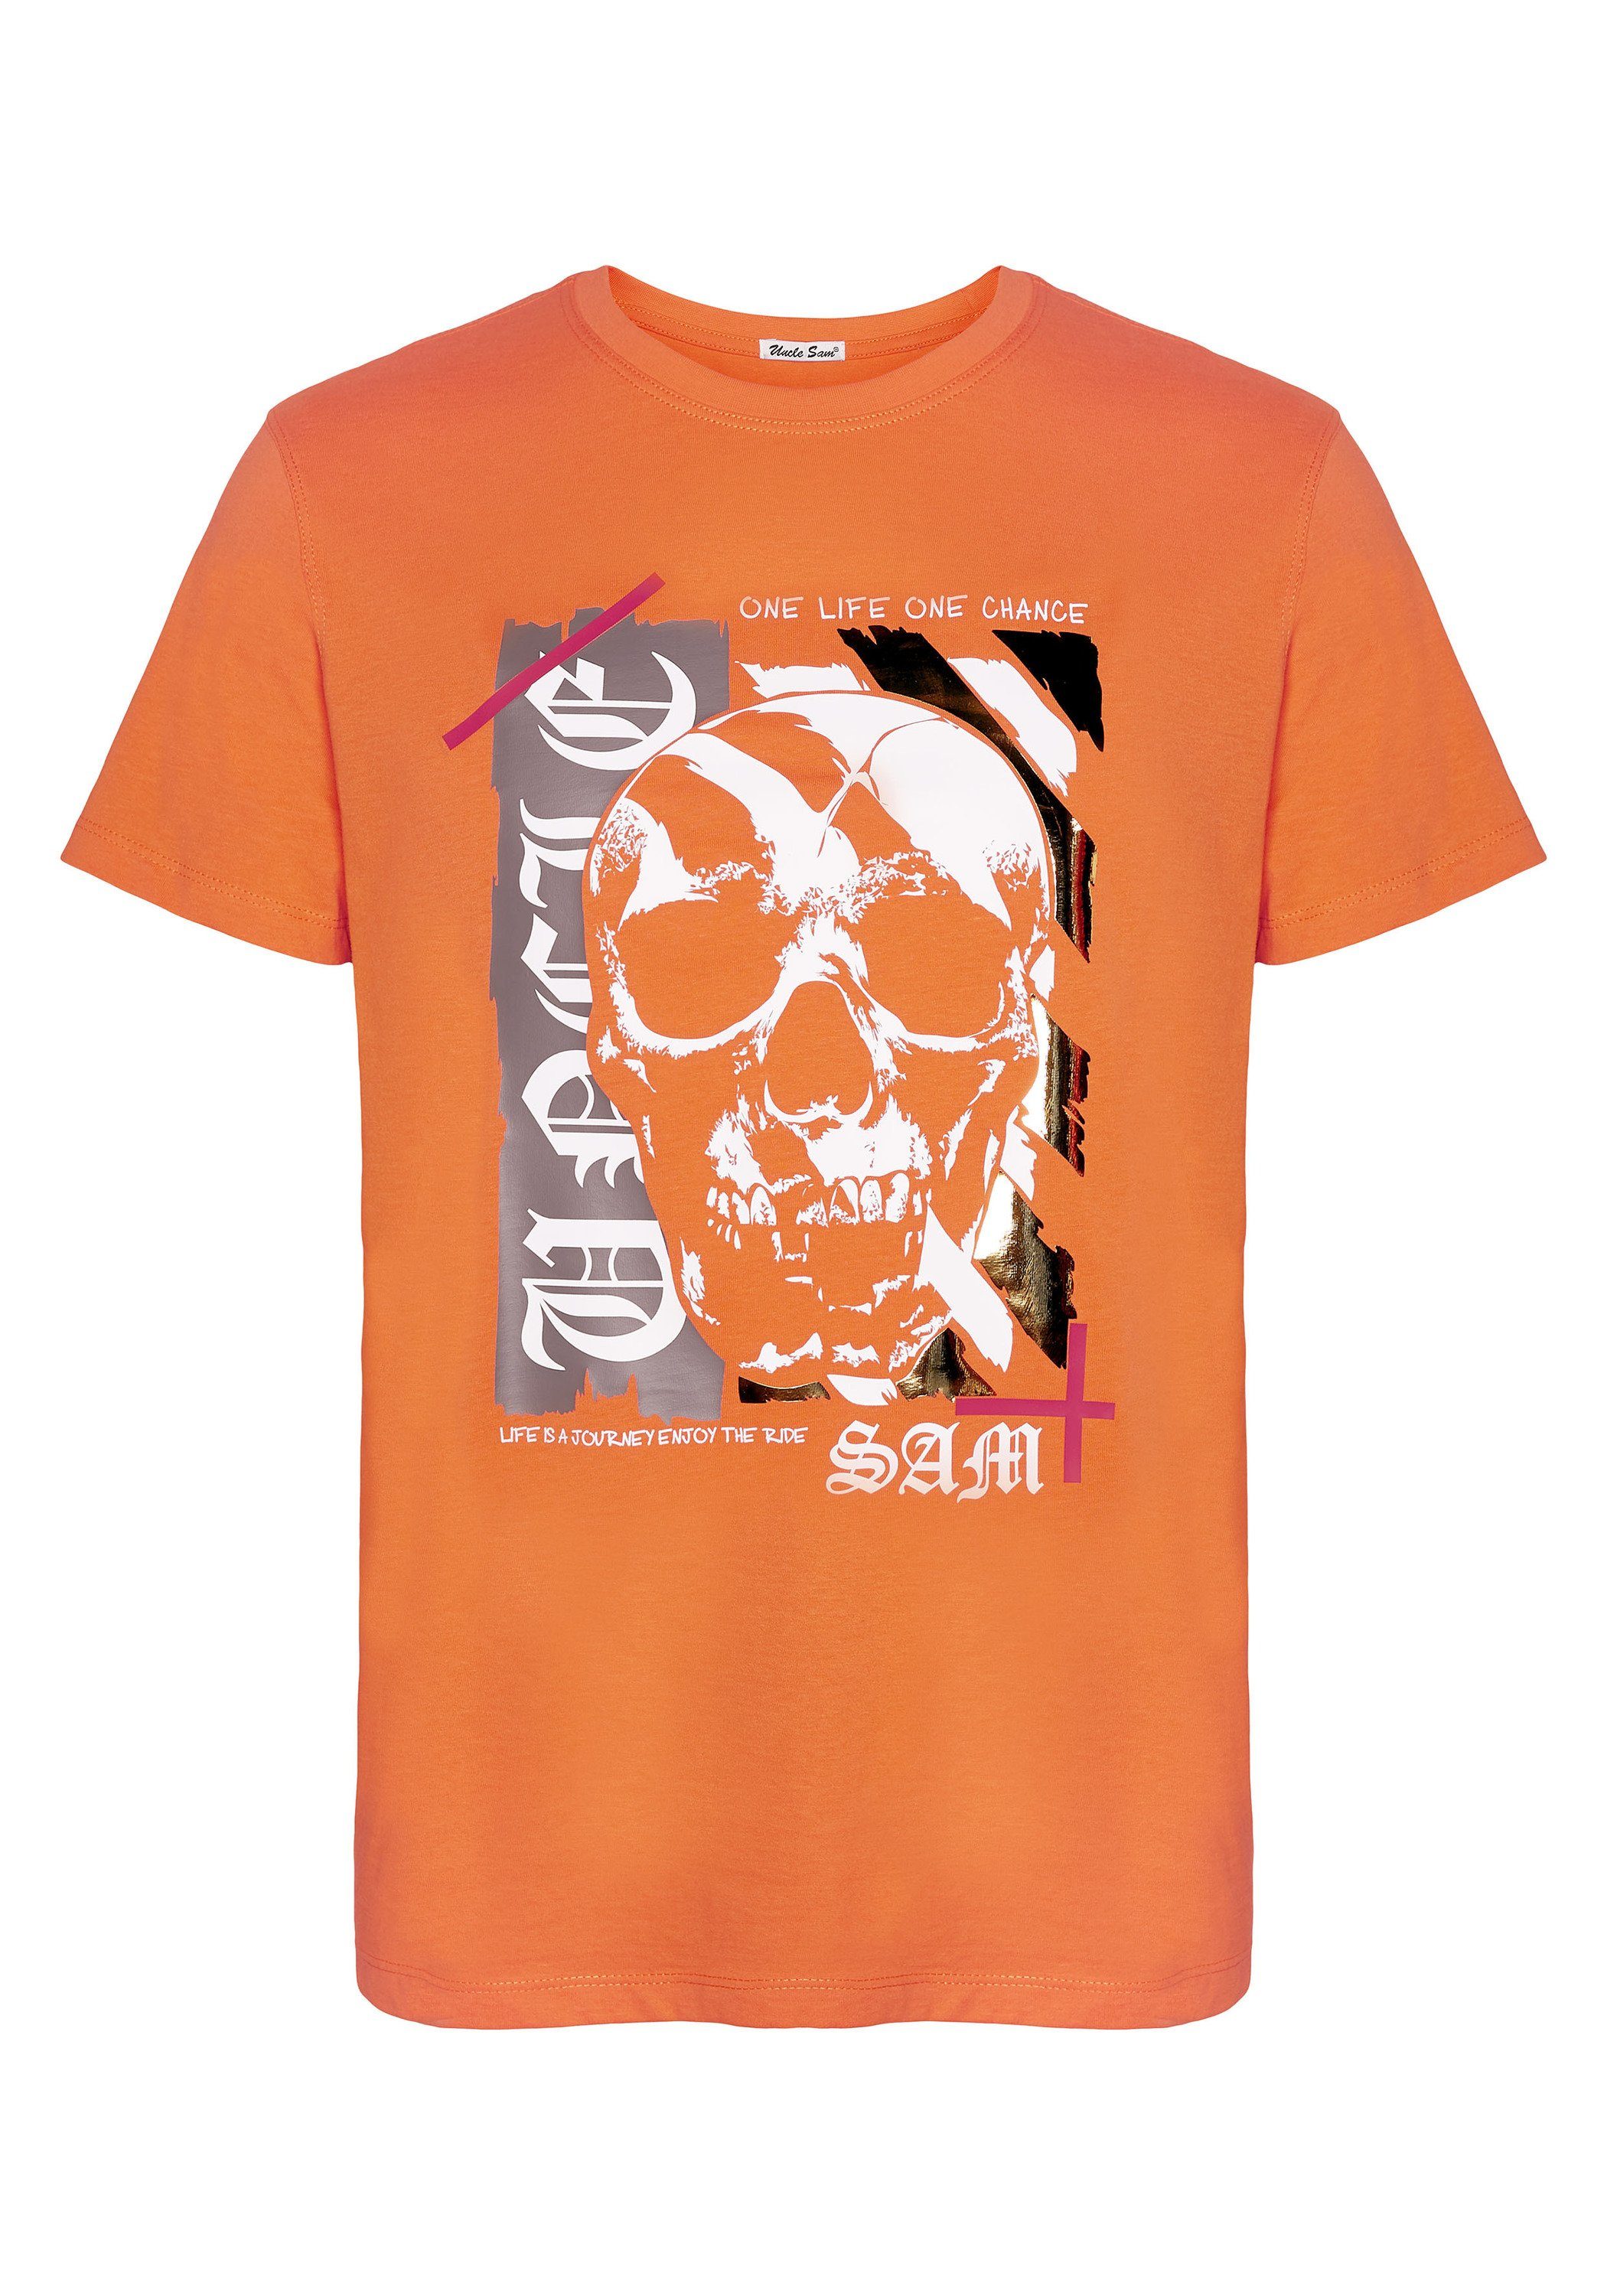 Uncle Sam Print Orange Vermillon Totenkopf Print-Shirt mit 16-1362